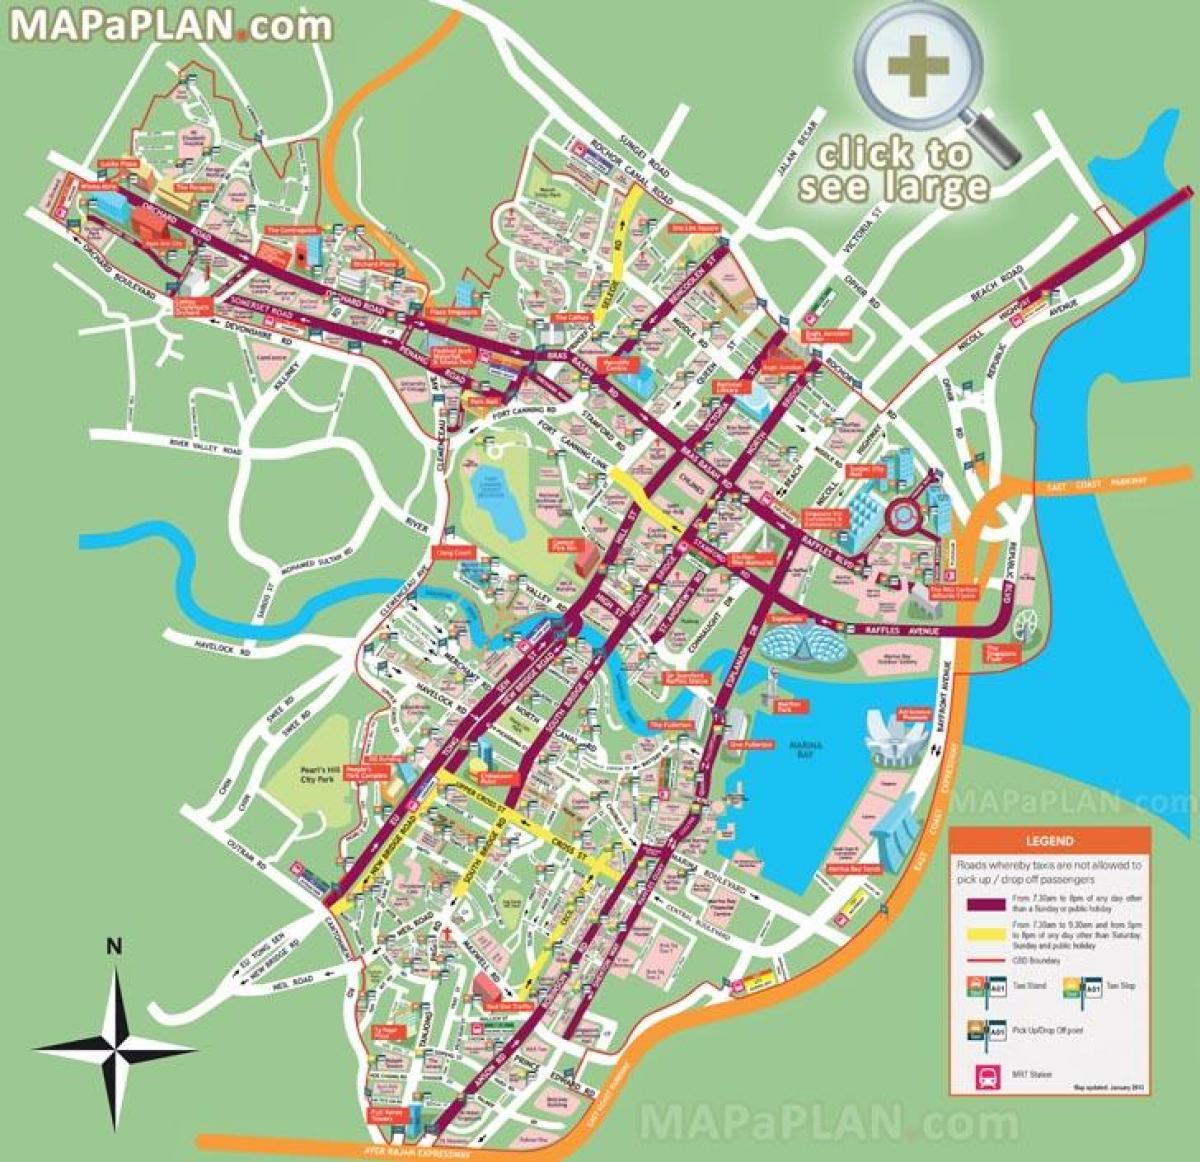 De turisme de singapur mapa de spots